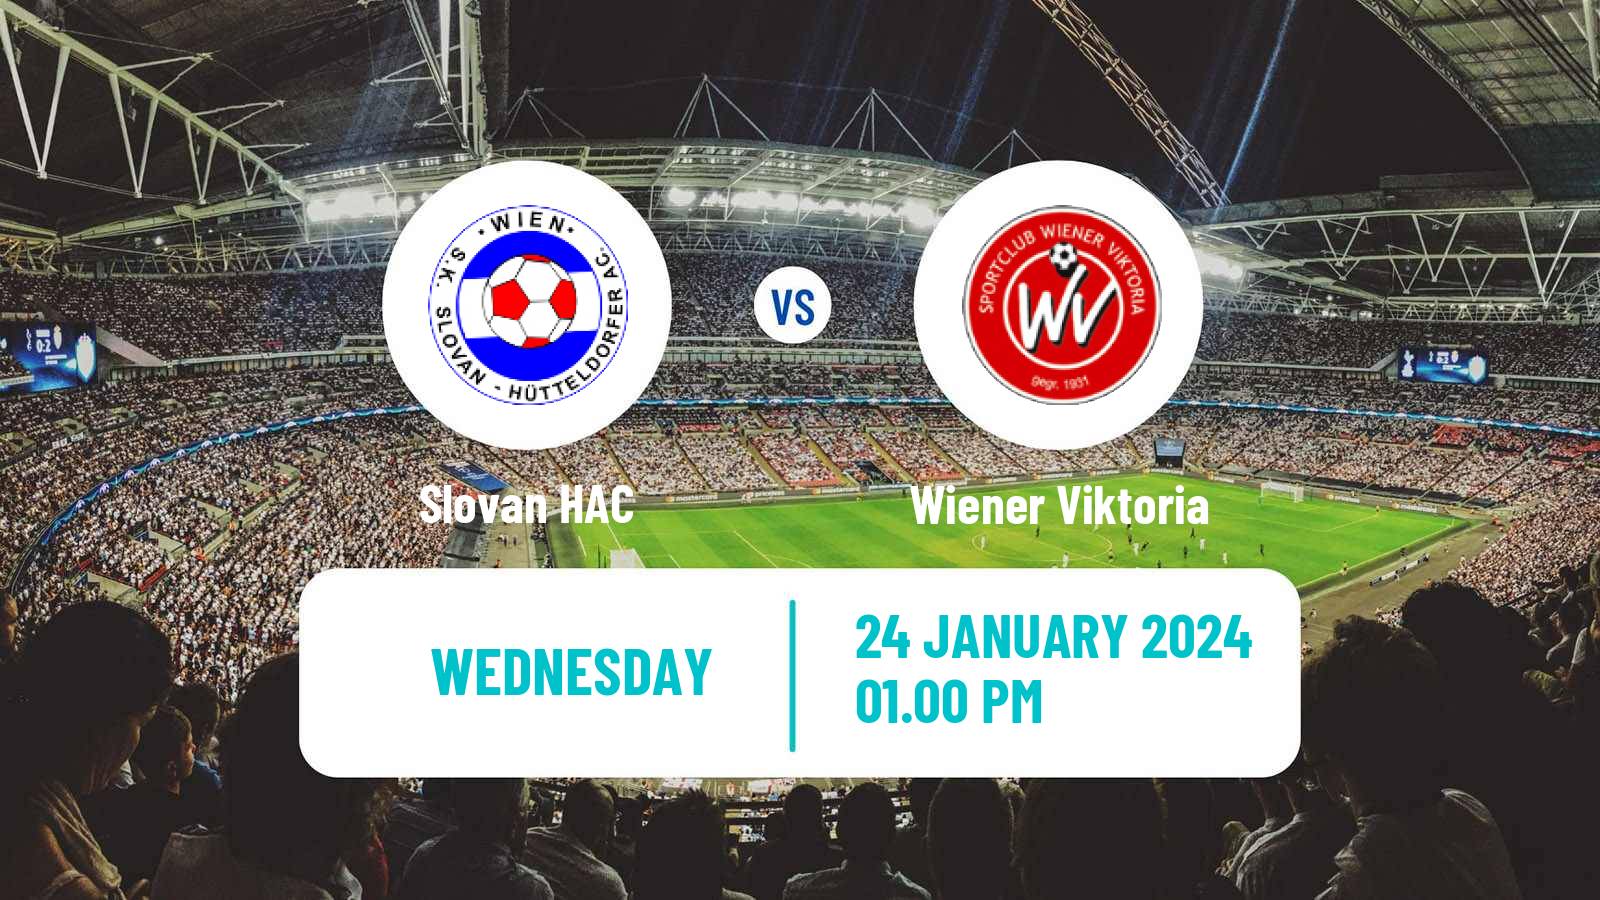 Soccer Club Friendly Slovan HAC - Wiener Viktoria